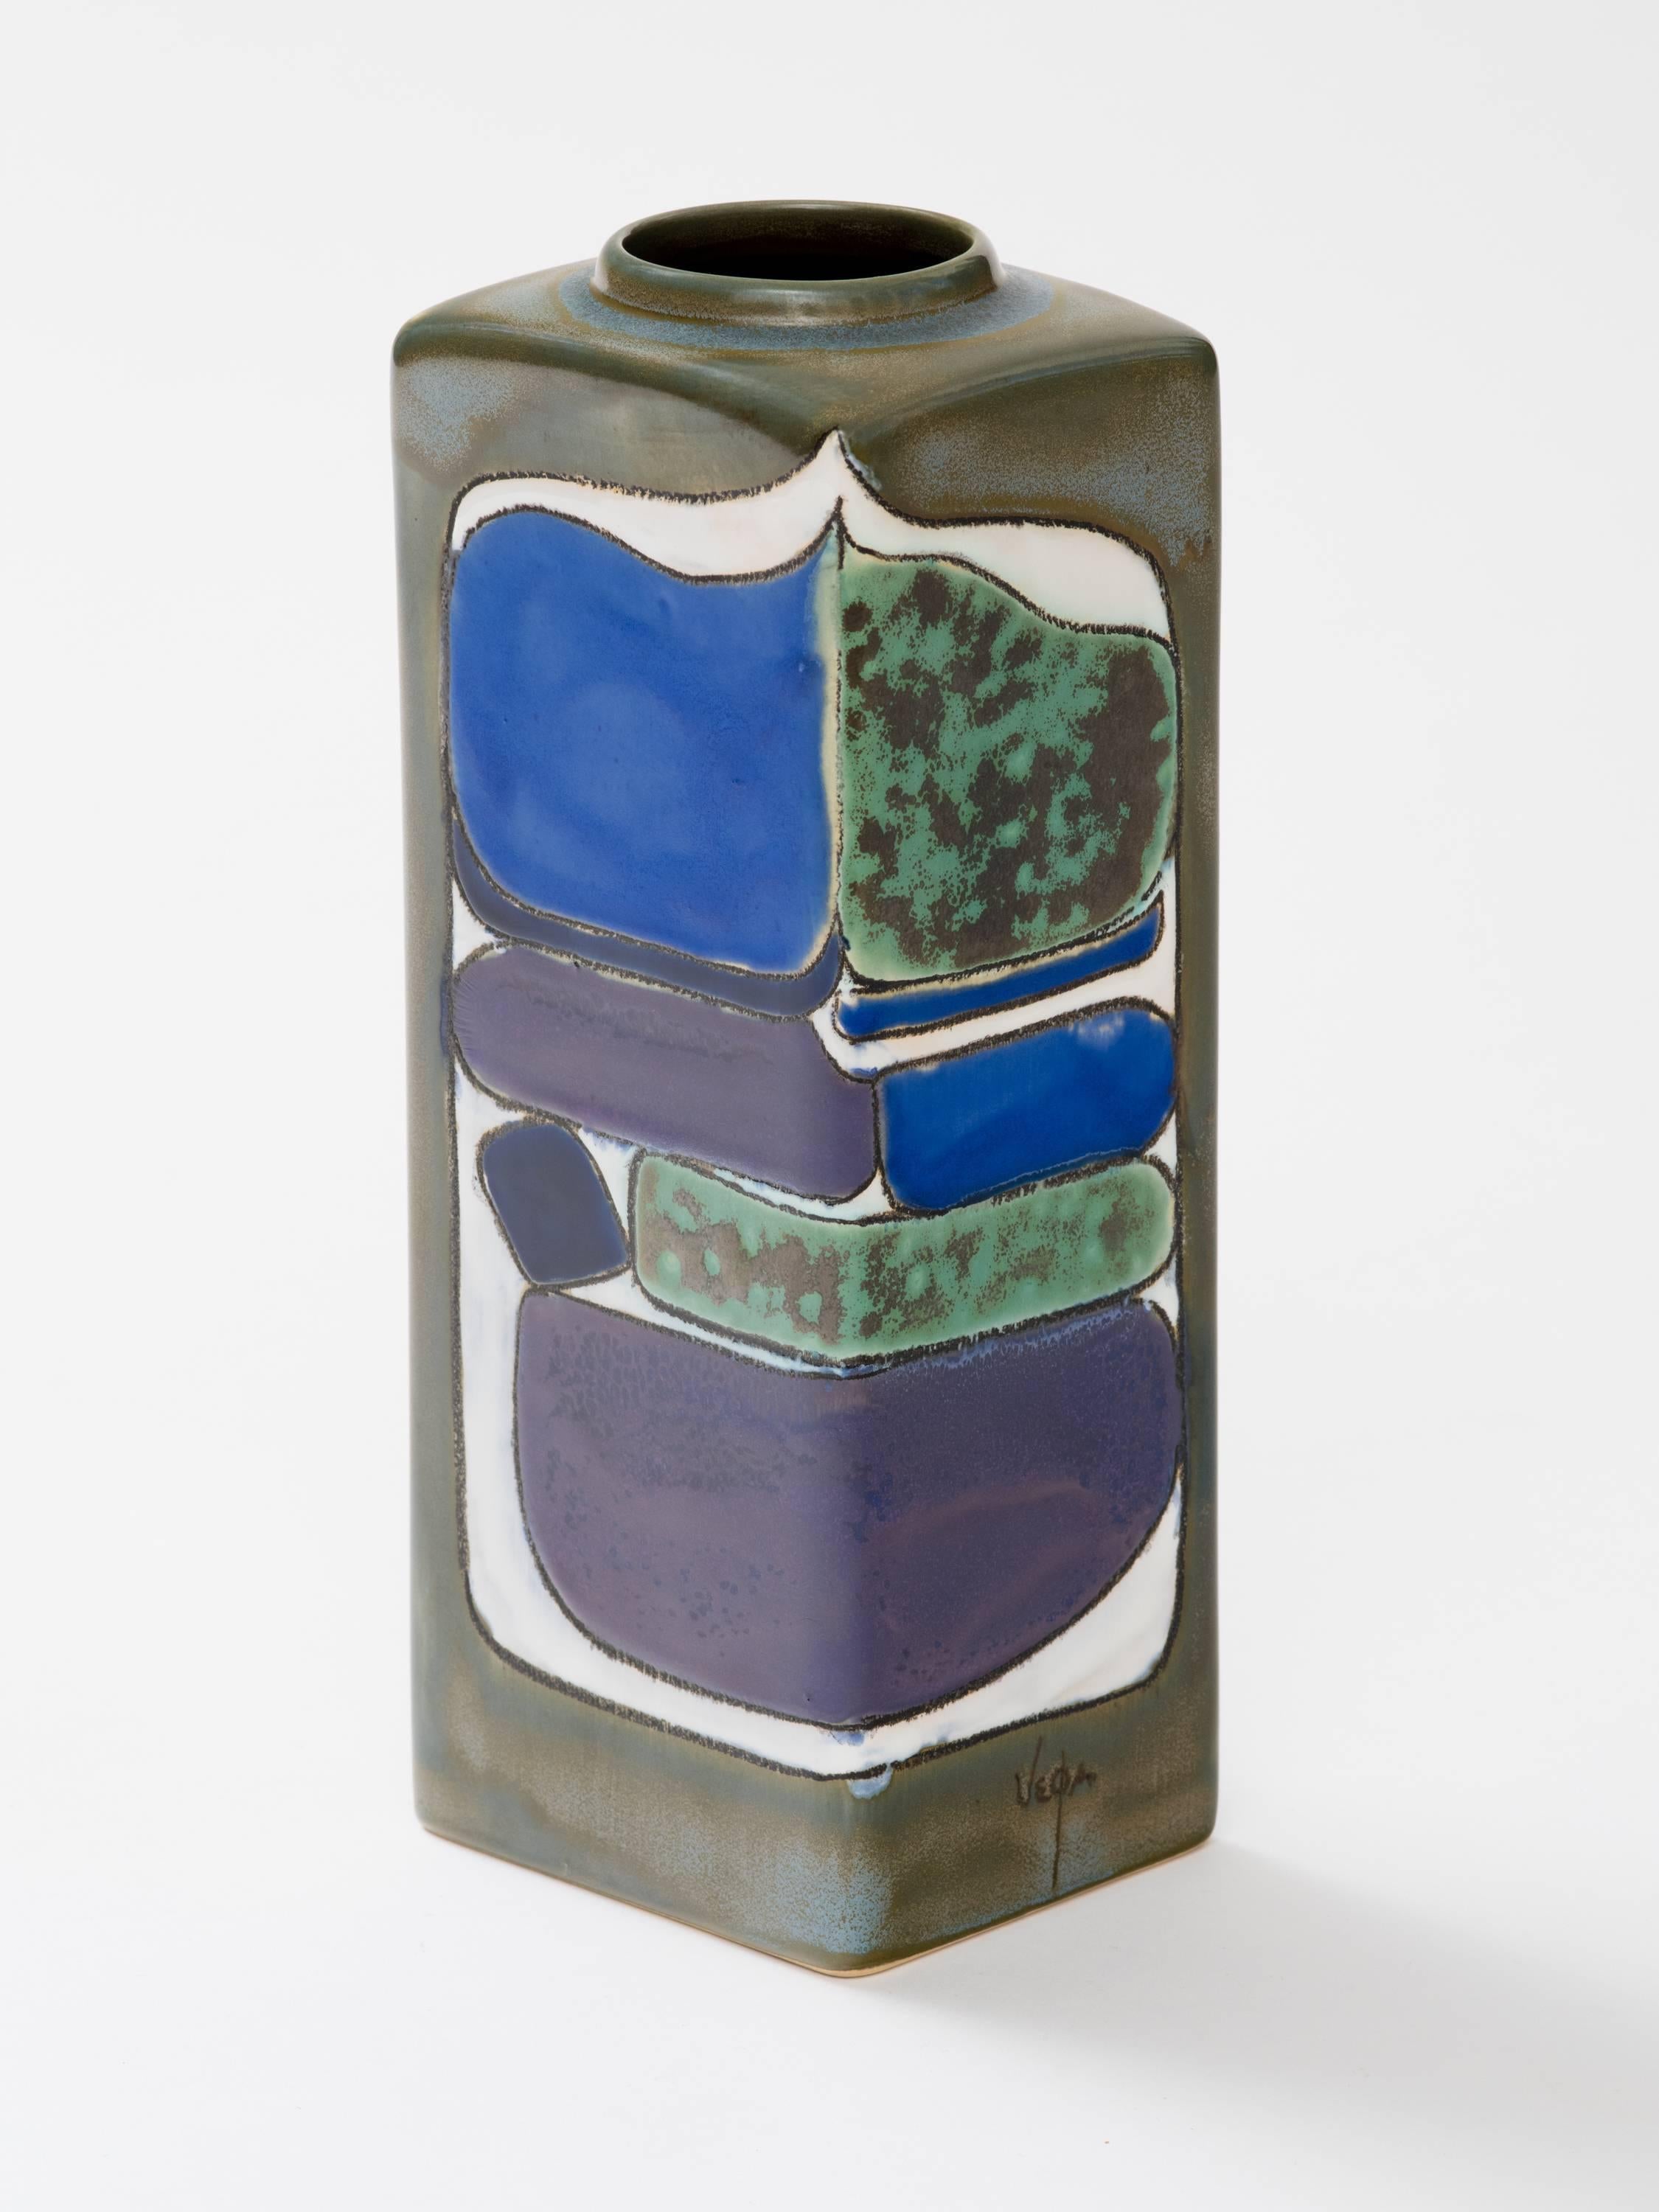 Mid-Century Modernist abstract ceramic vase by Eduardo Vega, signed.
Ecuador, circa 1970s.